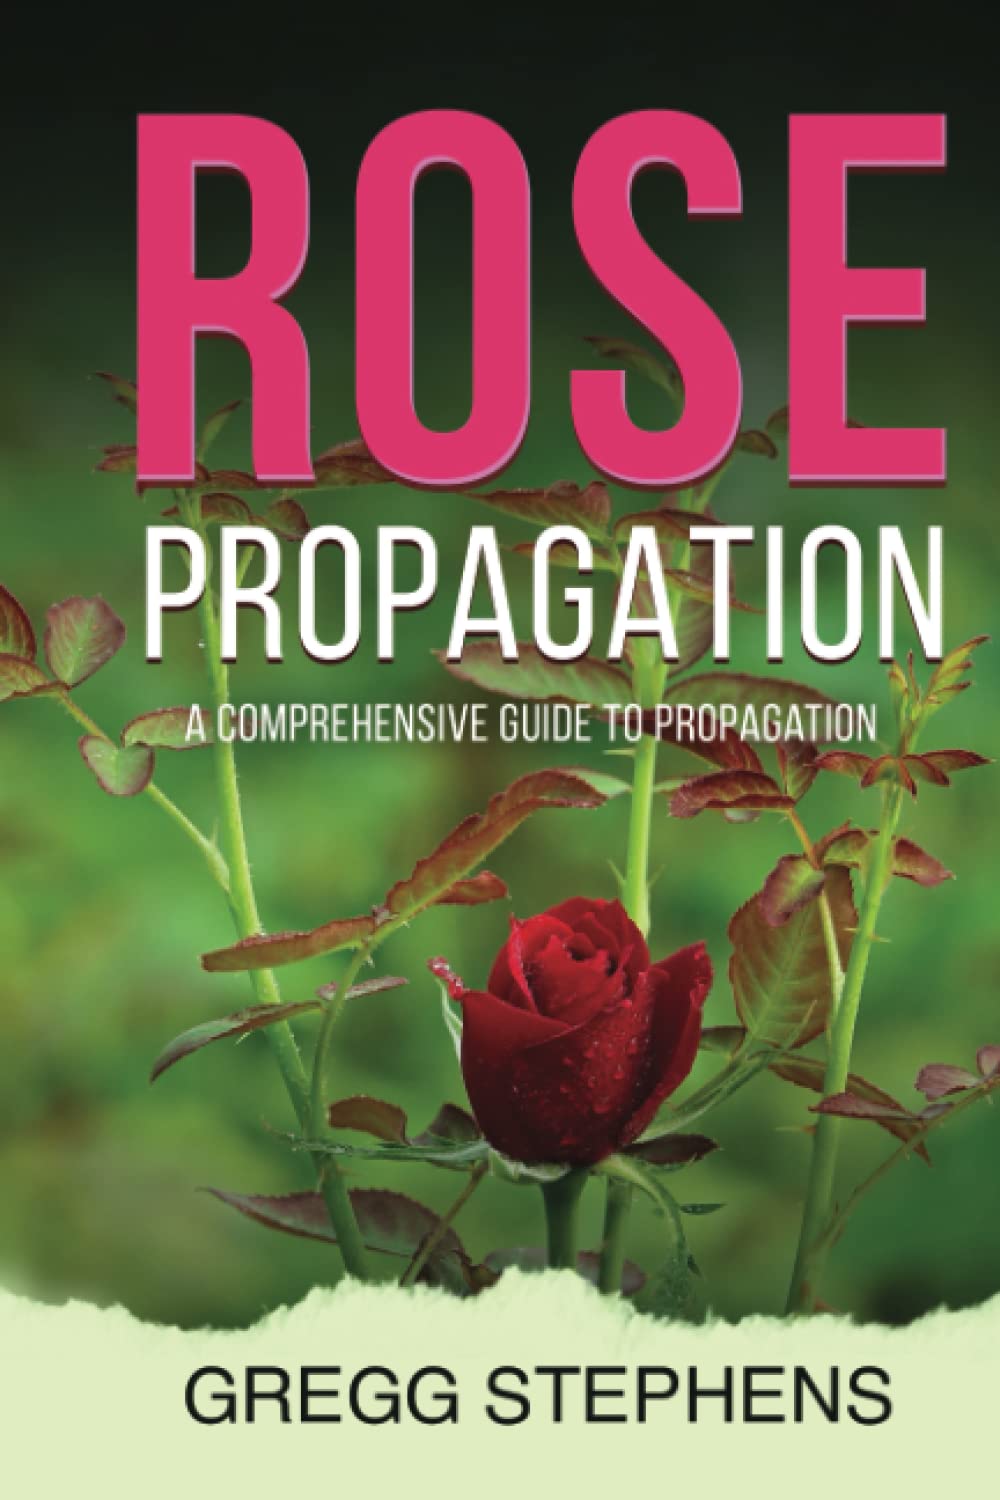 ROSE PROPAGATION: “A Comprehensive Guide to Propagation